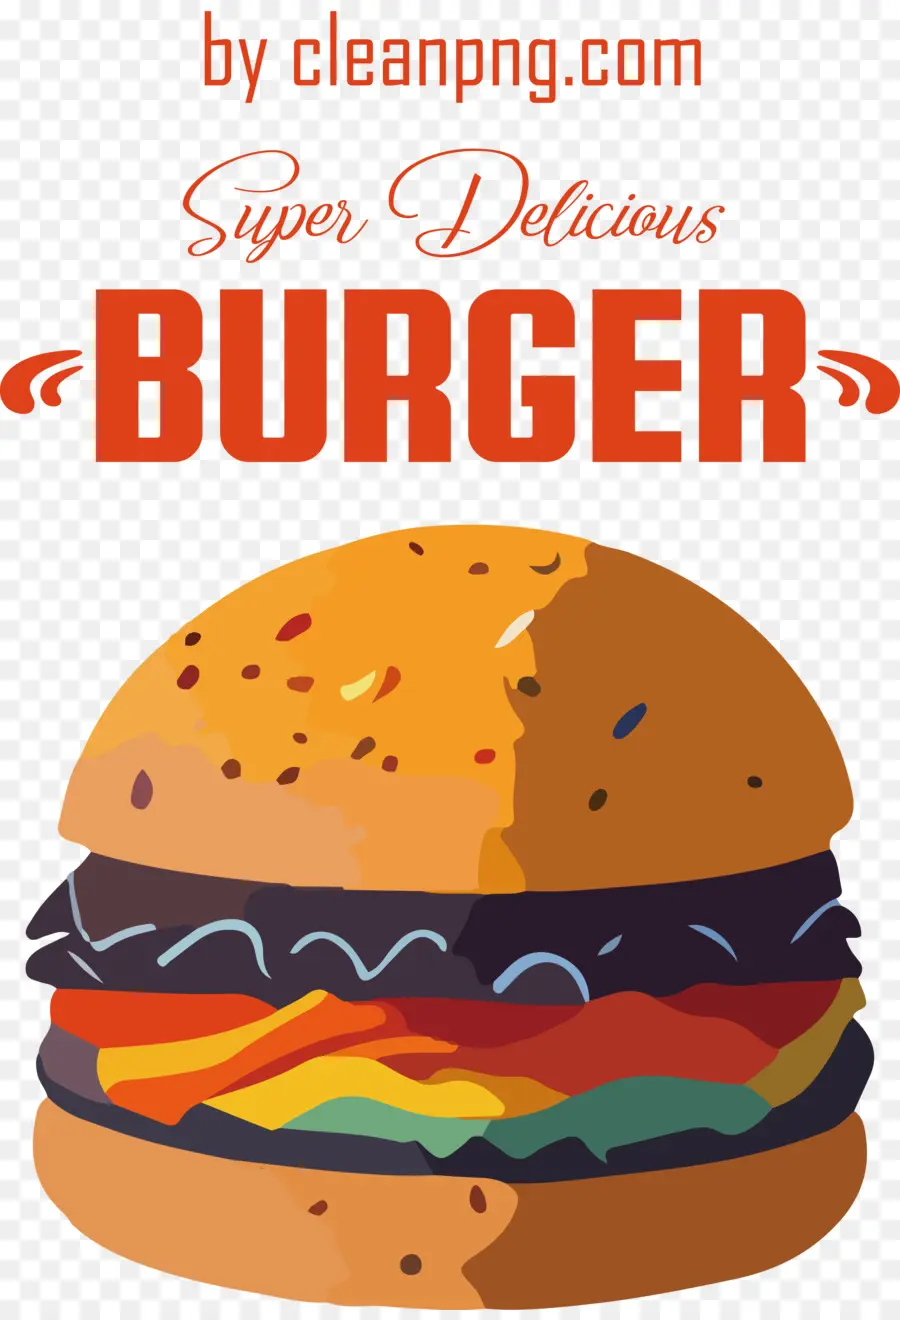 Super köstlicher Burger International Burger Day Burger Fast Food - 